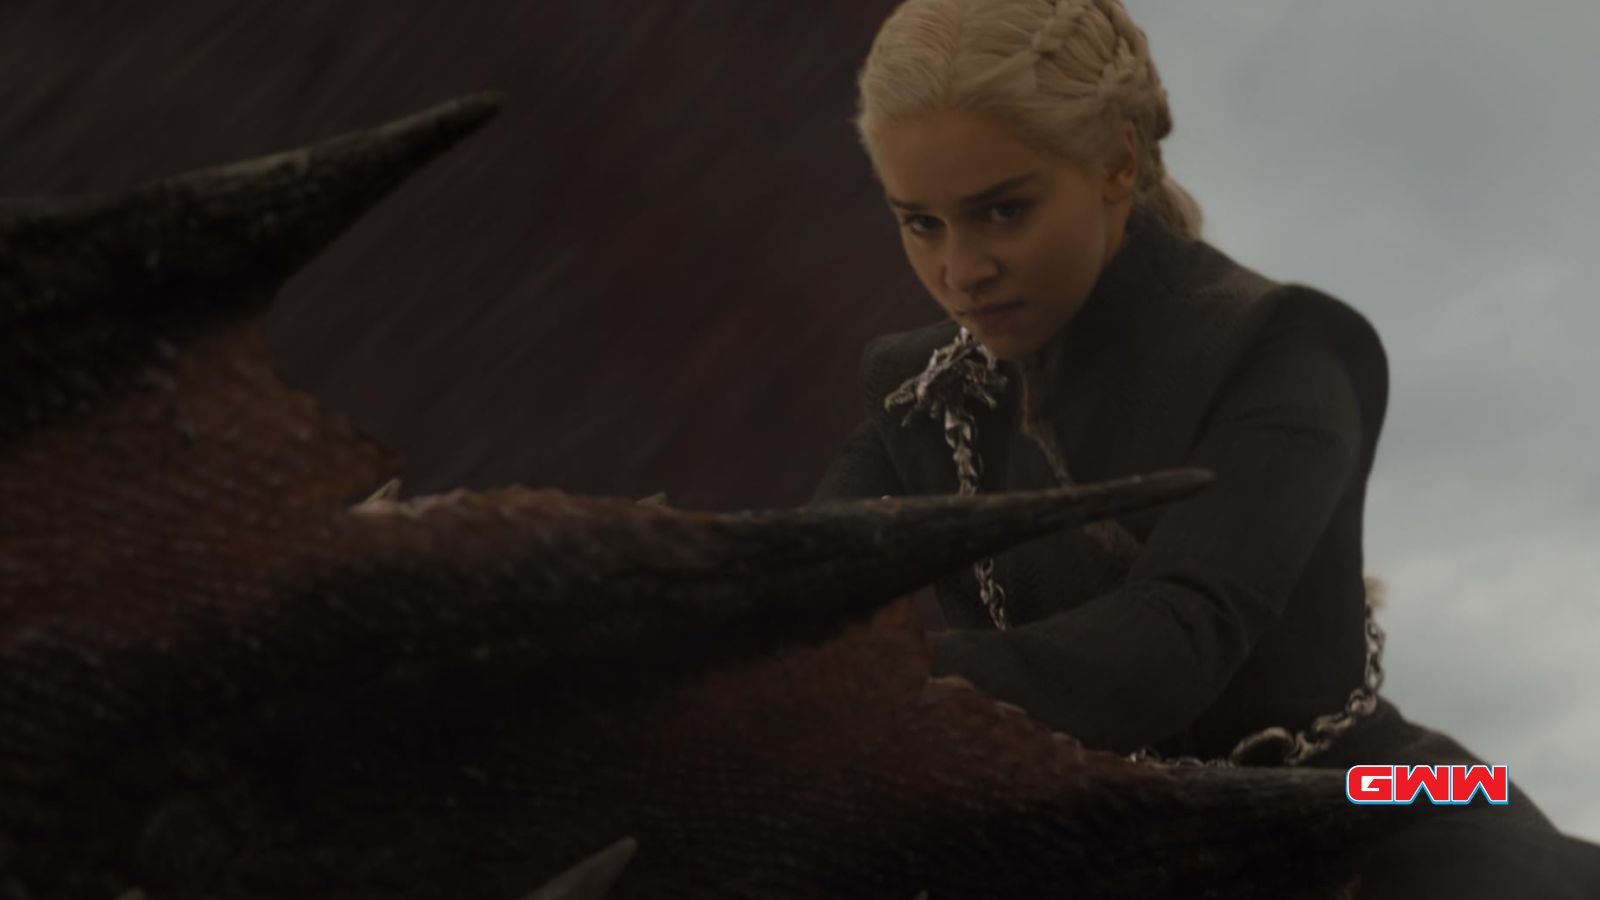 Daenerys Targaryen riding a dragon from Game of Thrones series